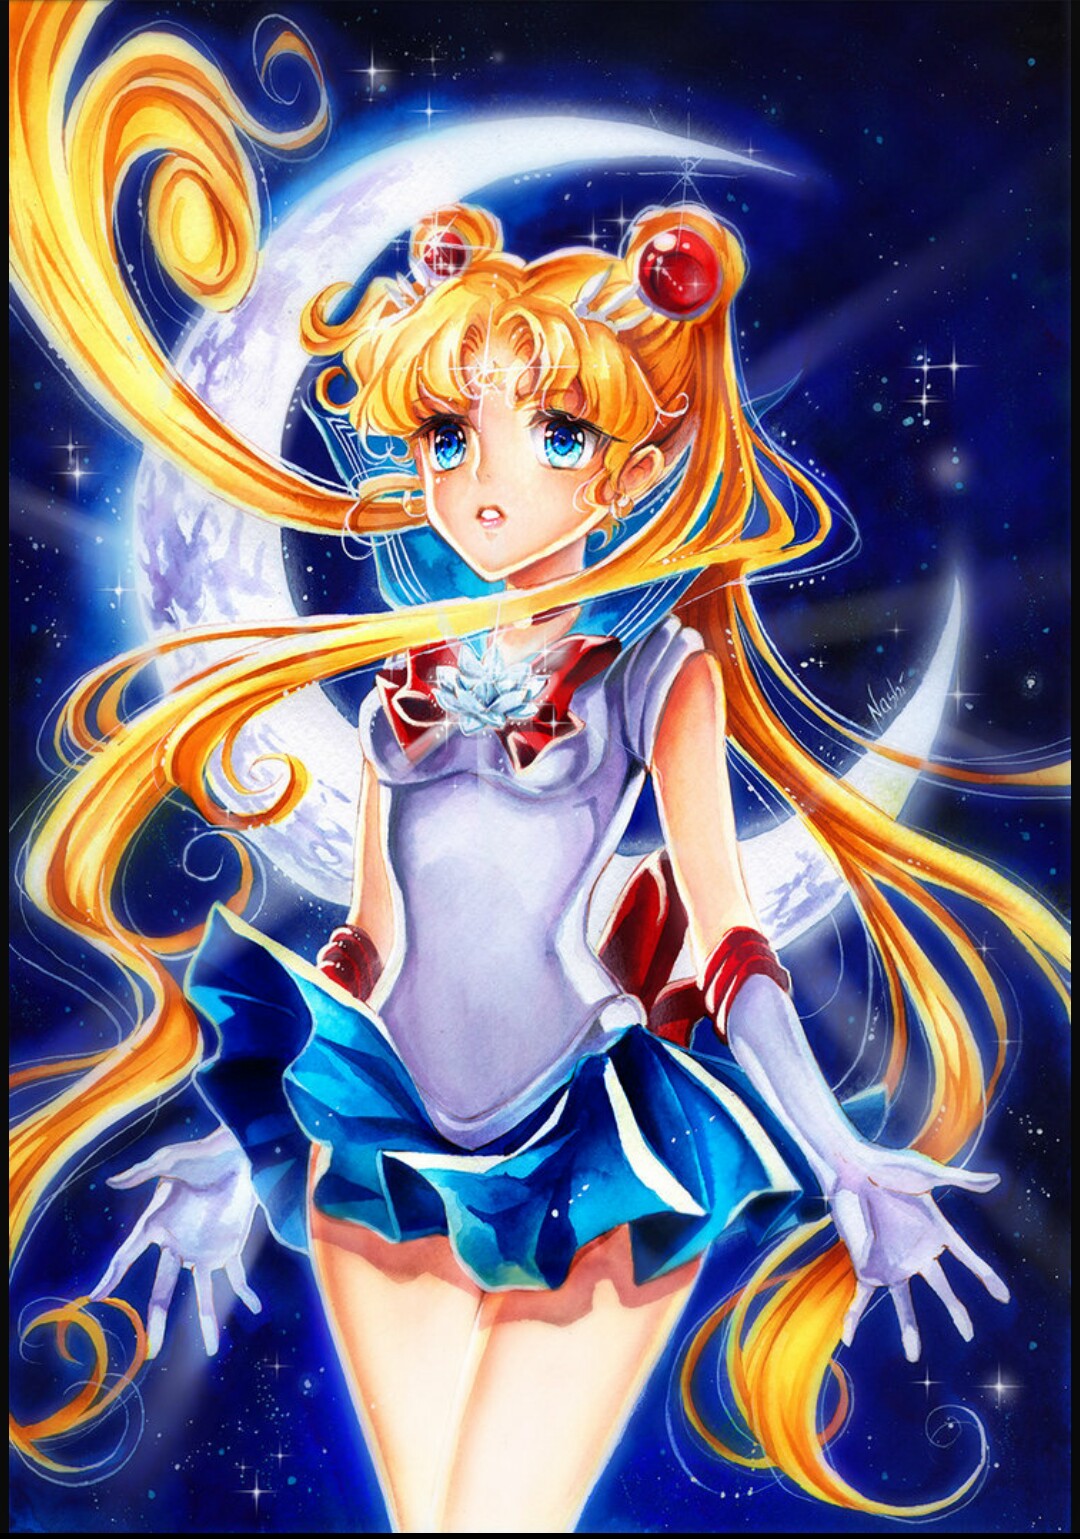 Sailor Moon Anime Completo Español Latino 480p Series Por Mega 